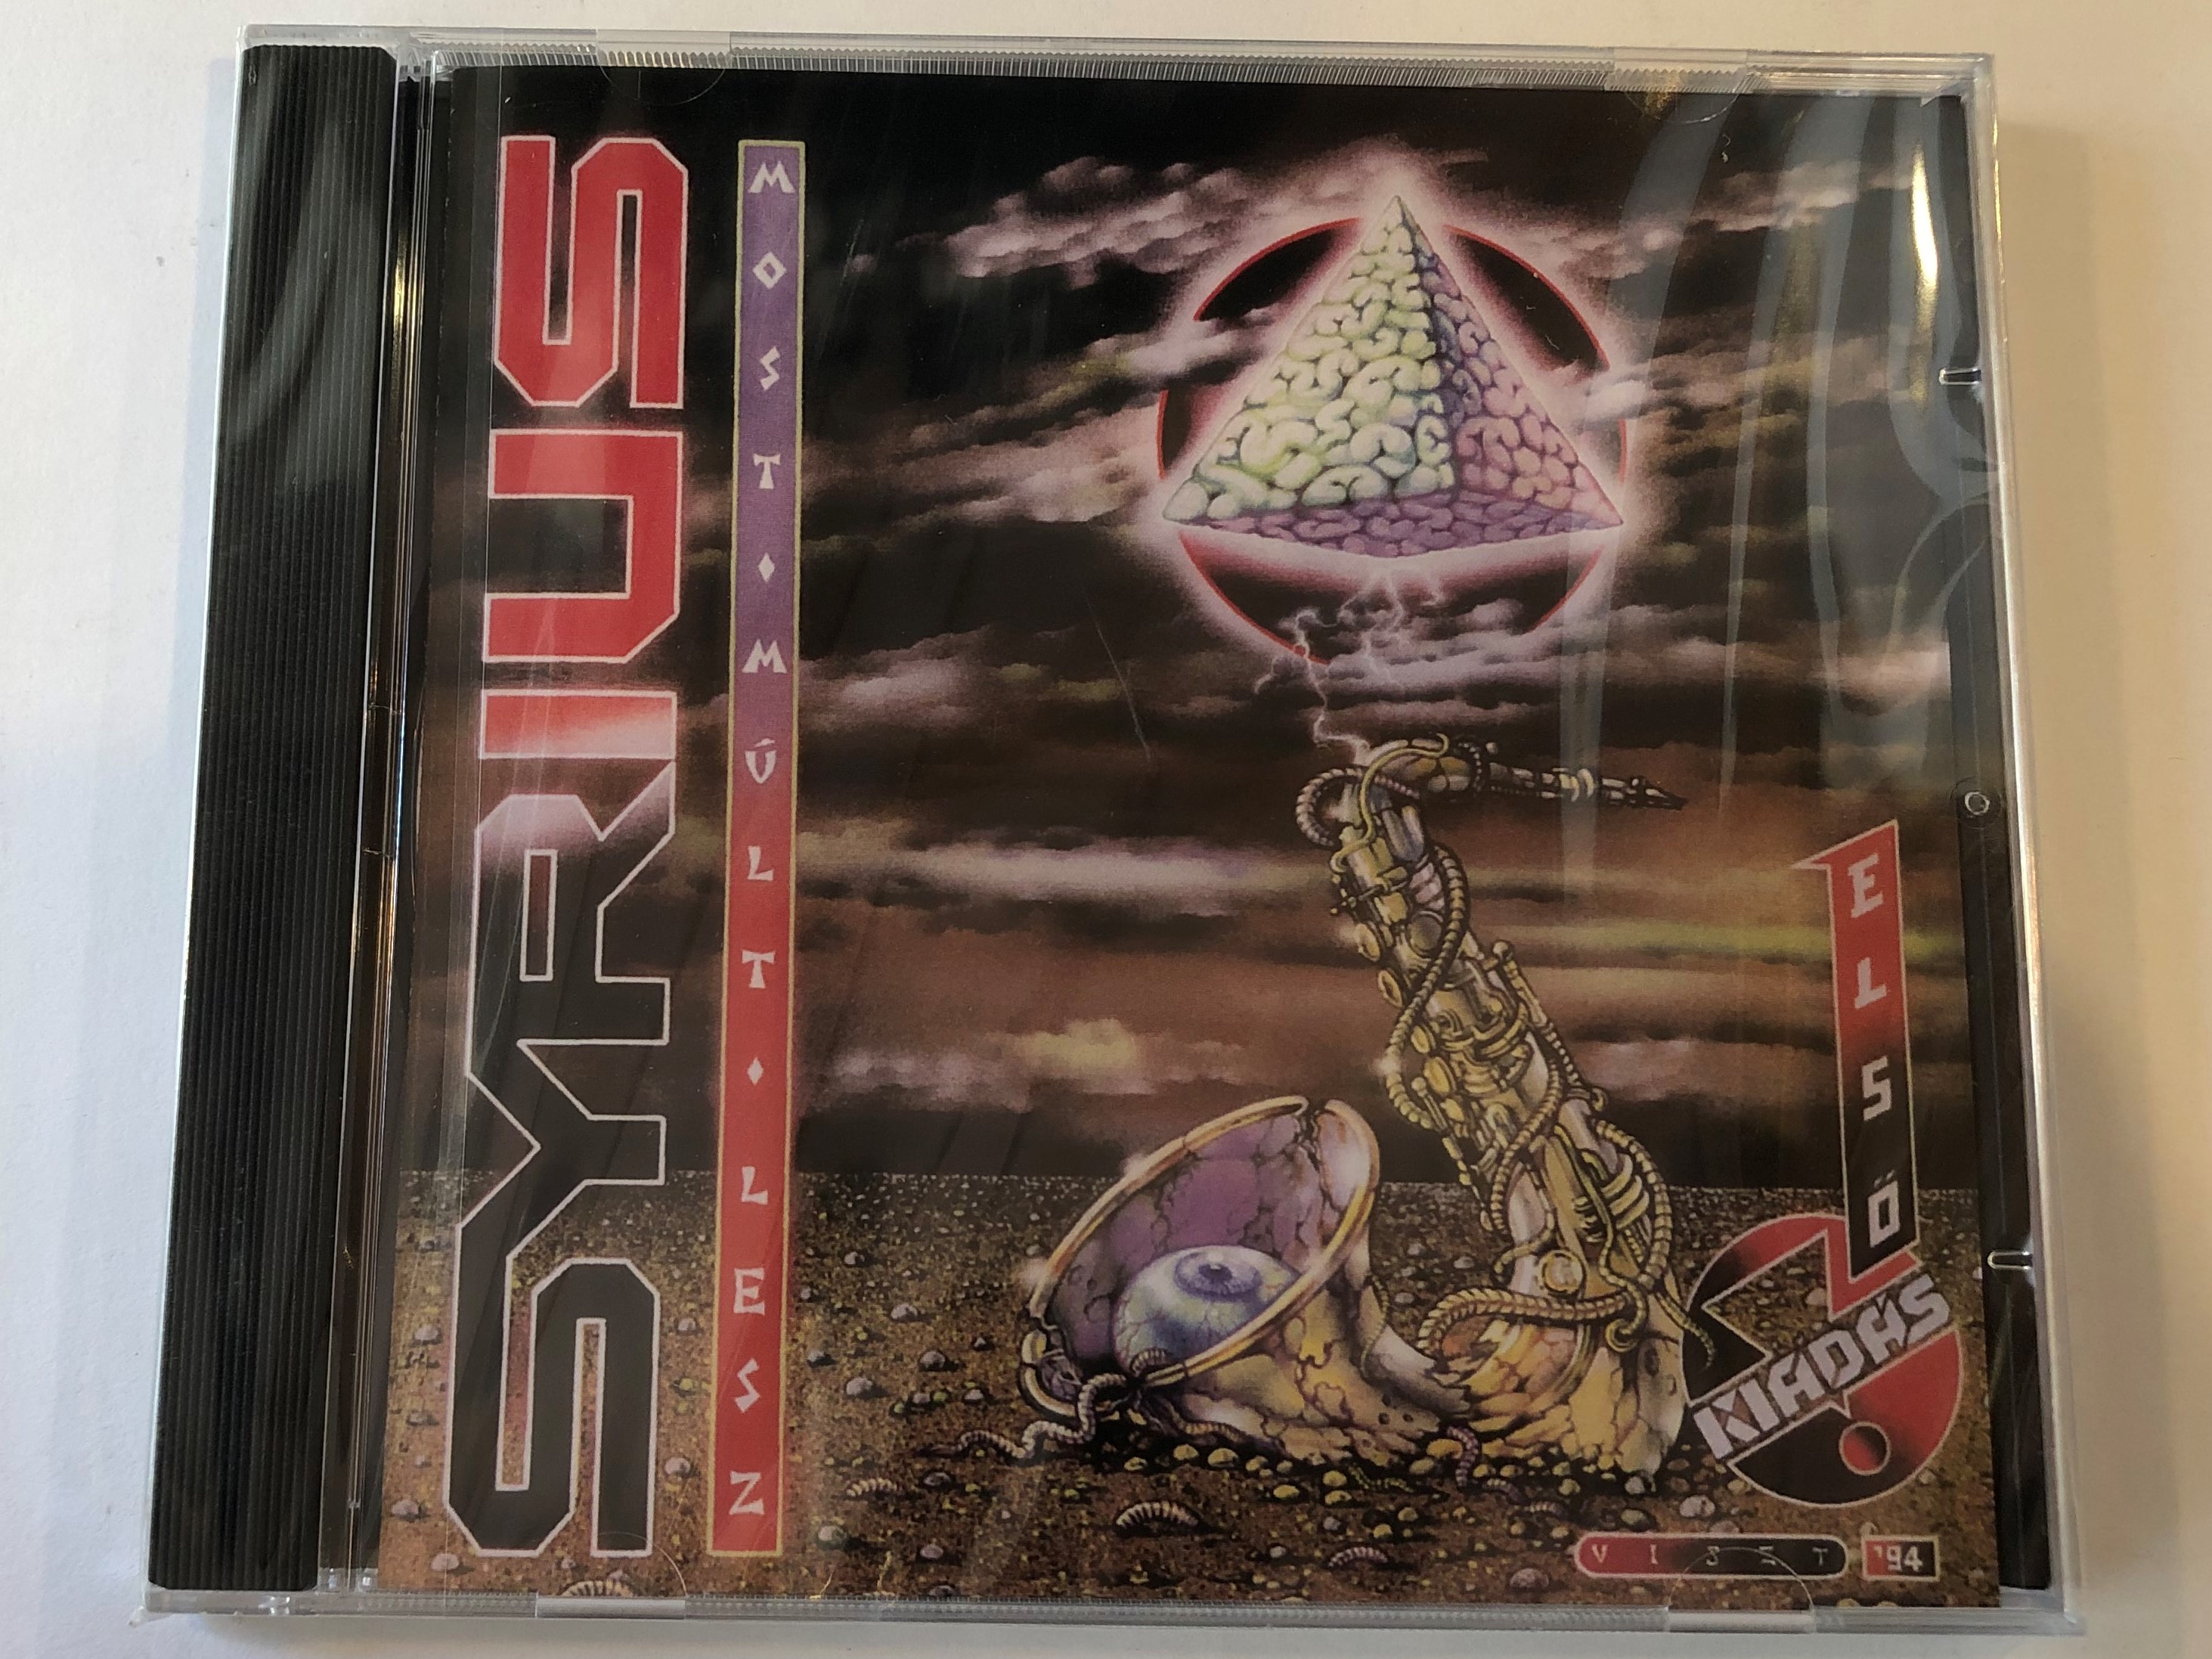 syrius-most-m-lt-lesz-gong-audio-cd-hcd-37733-1-.jpg